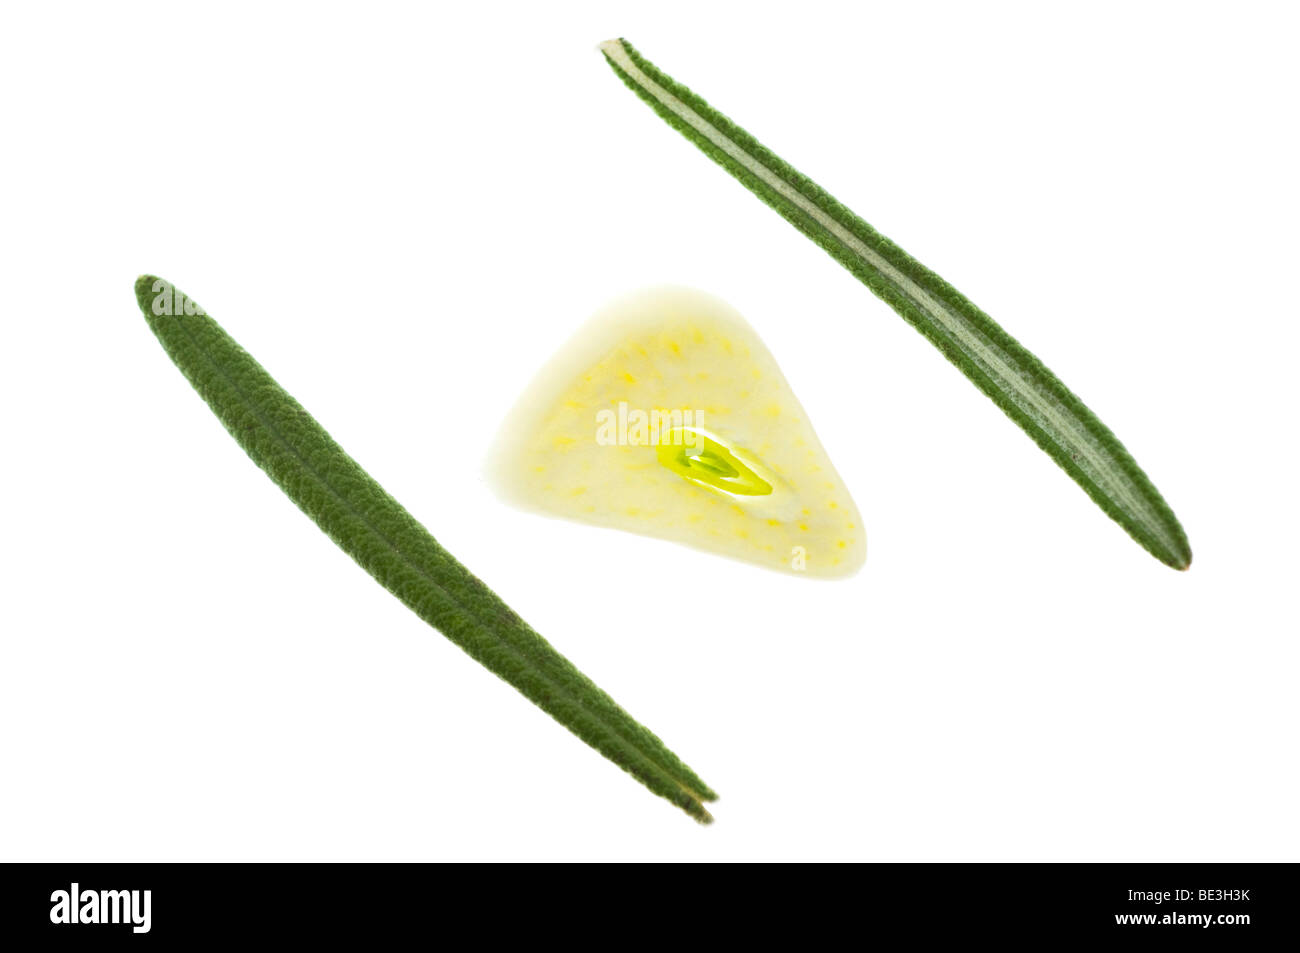 Garlic slice with rosemary Stock Photo